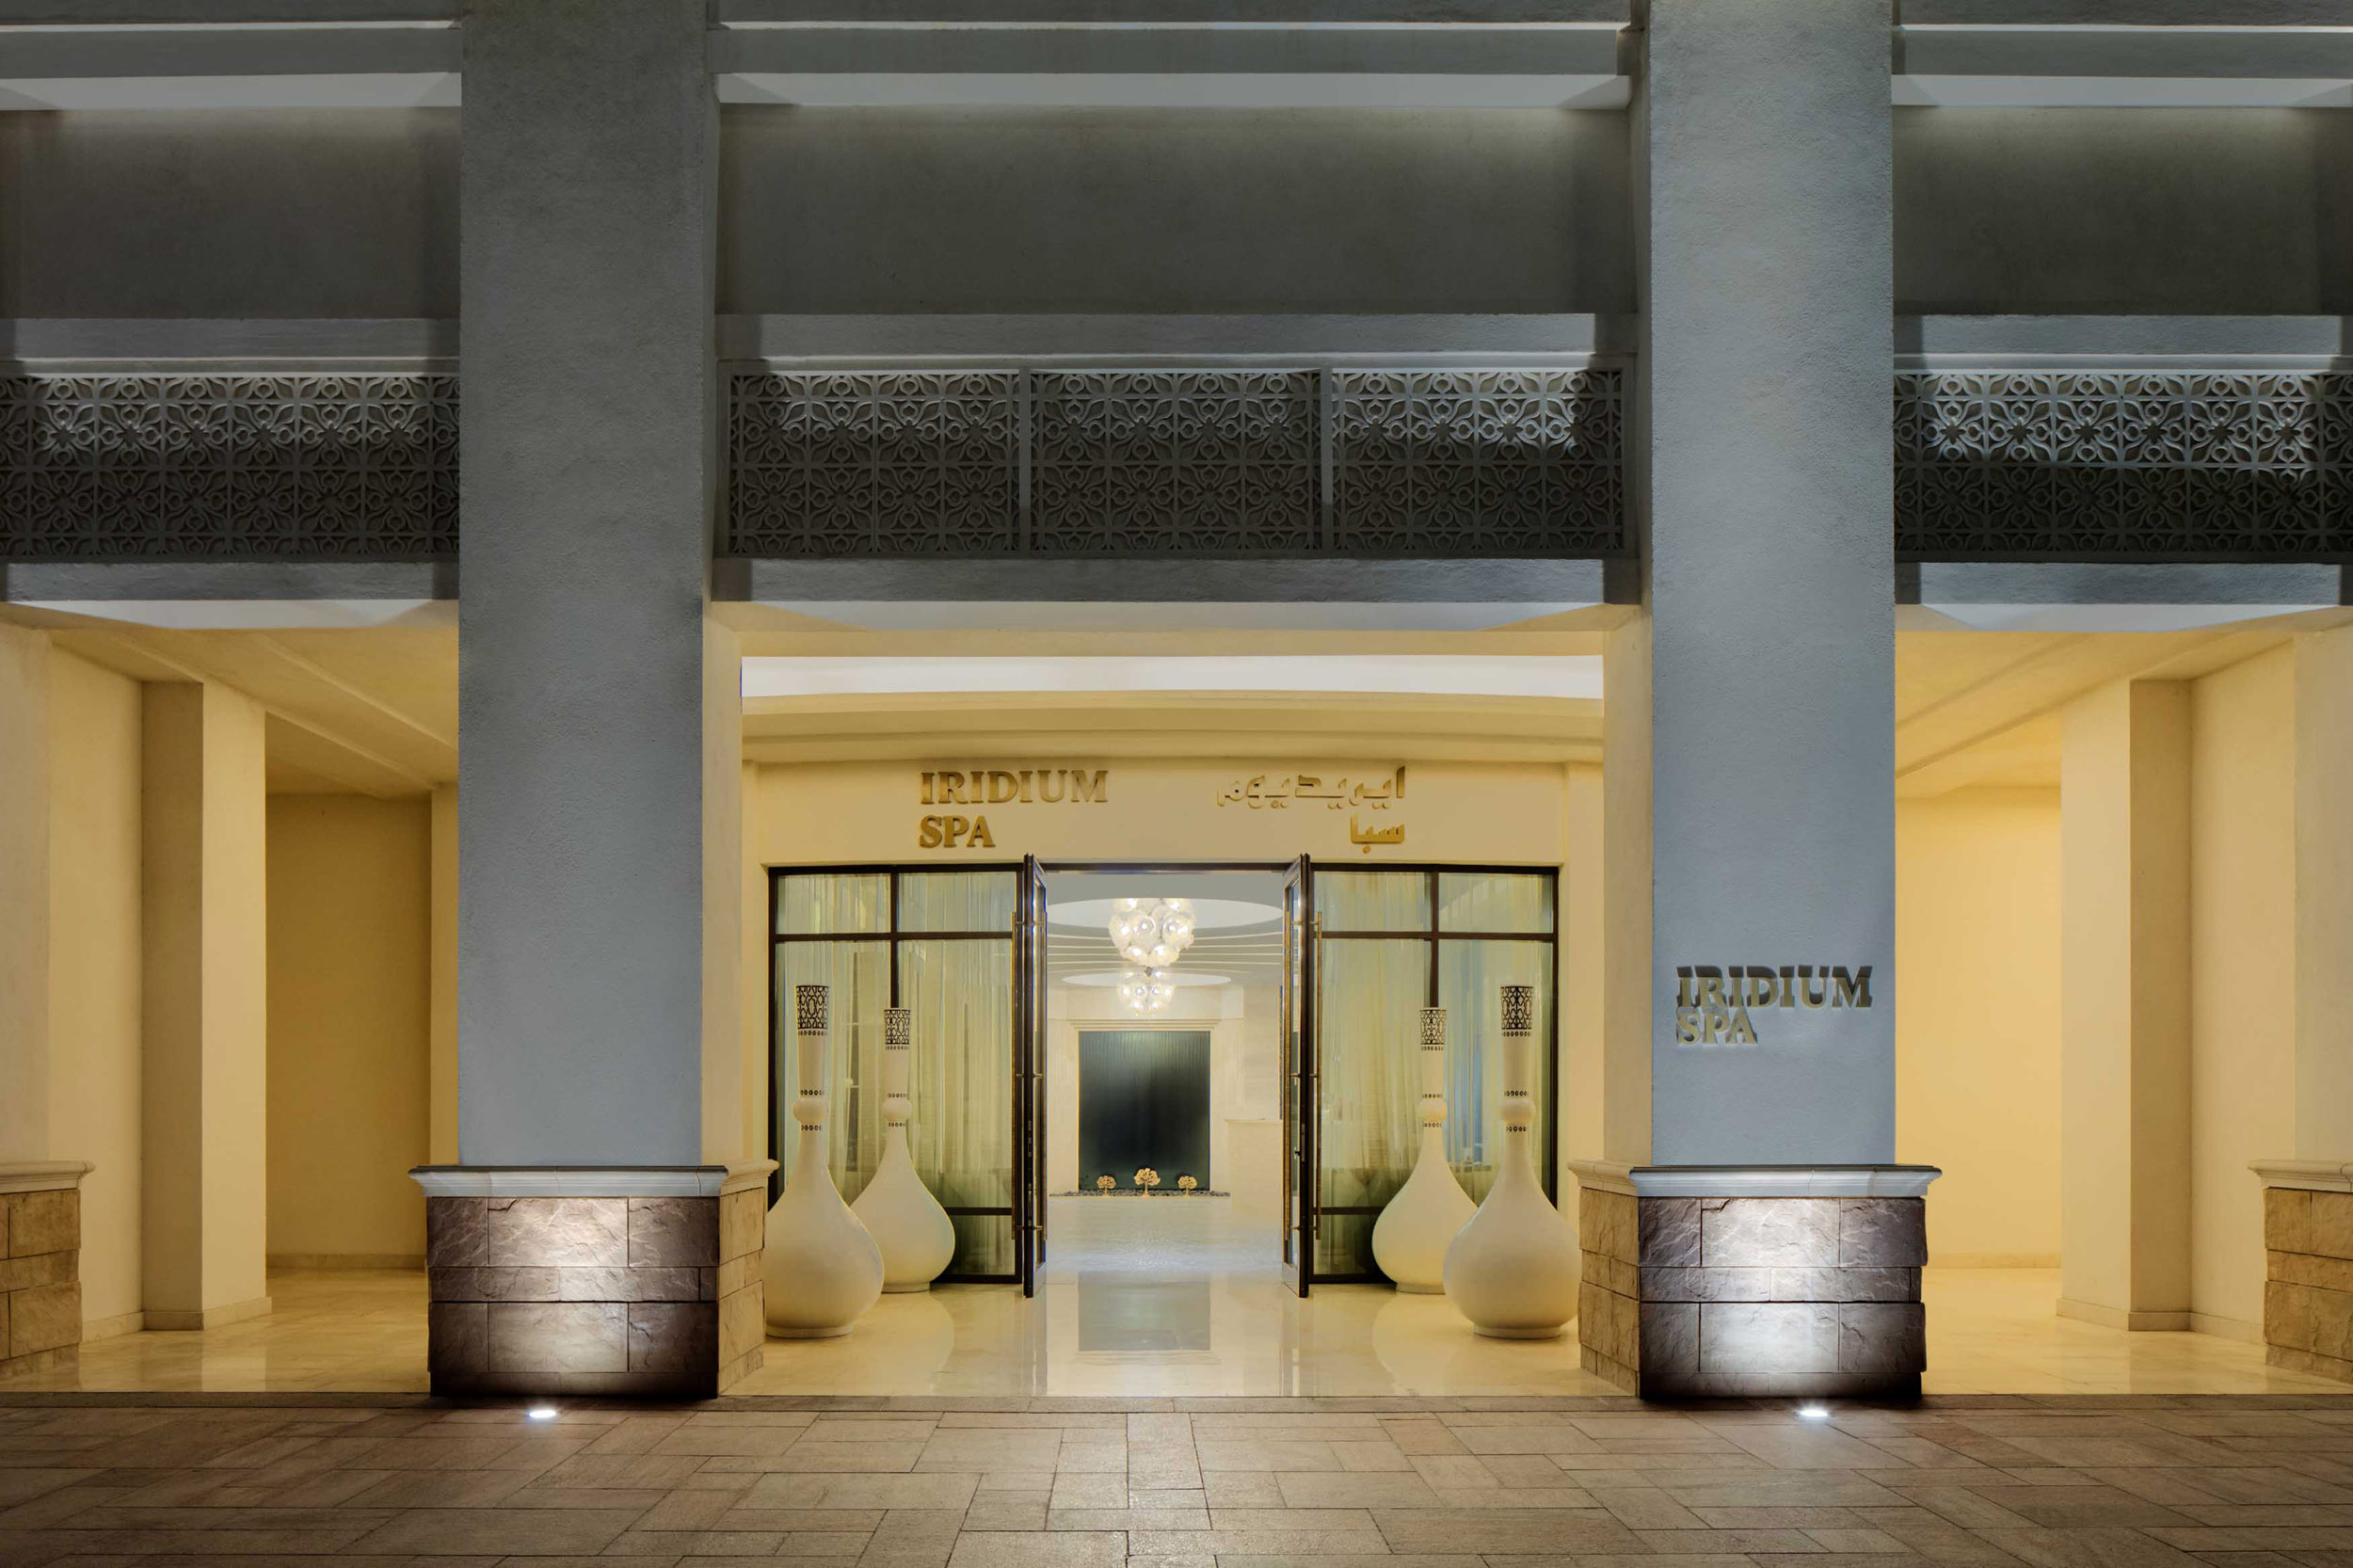 Iridium Spa At The St. Regis Saadiyat Island Resort, Abu Dhabi Reveals Its Spa Offers For June